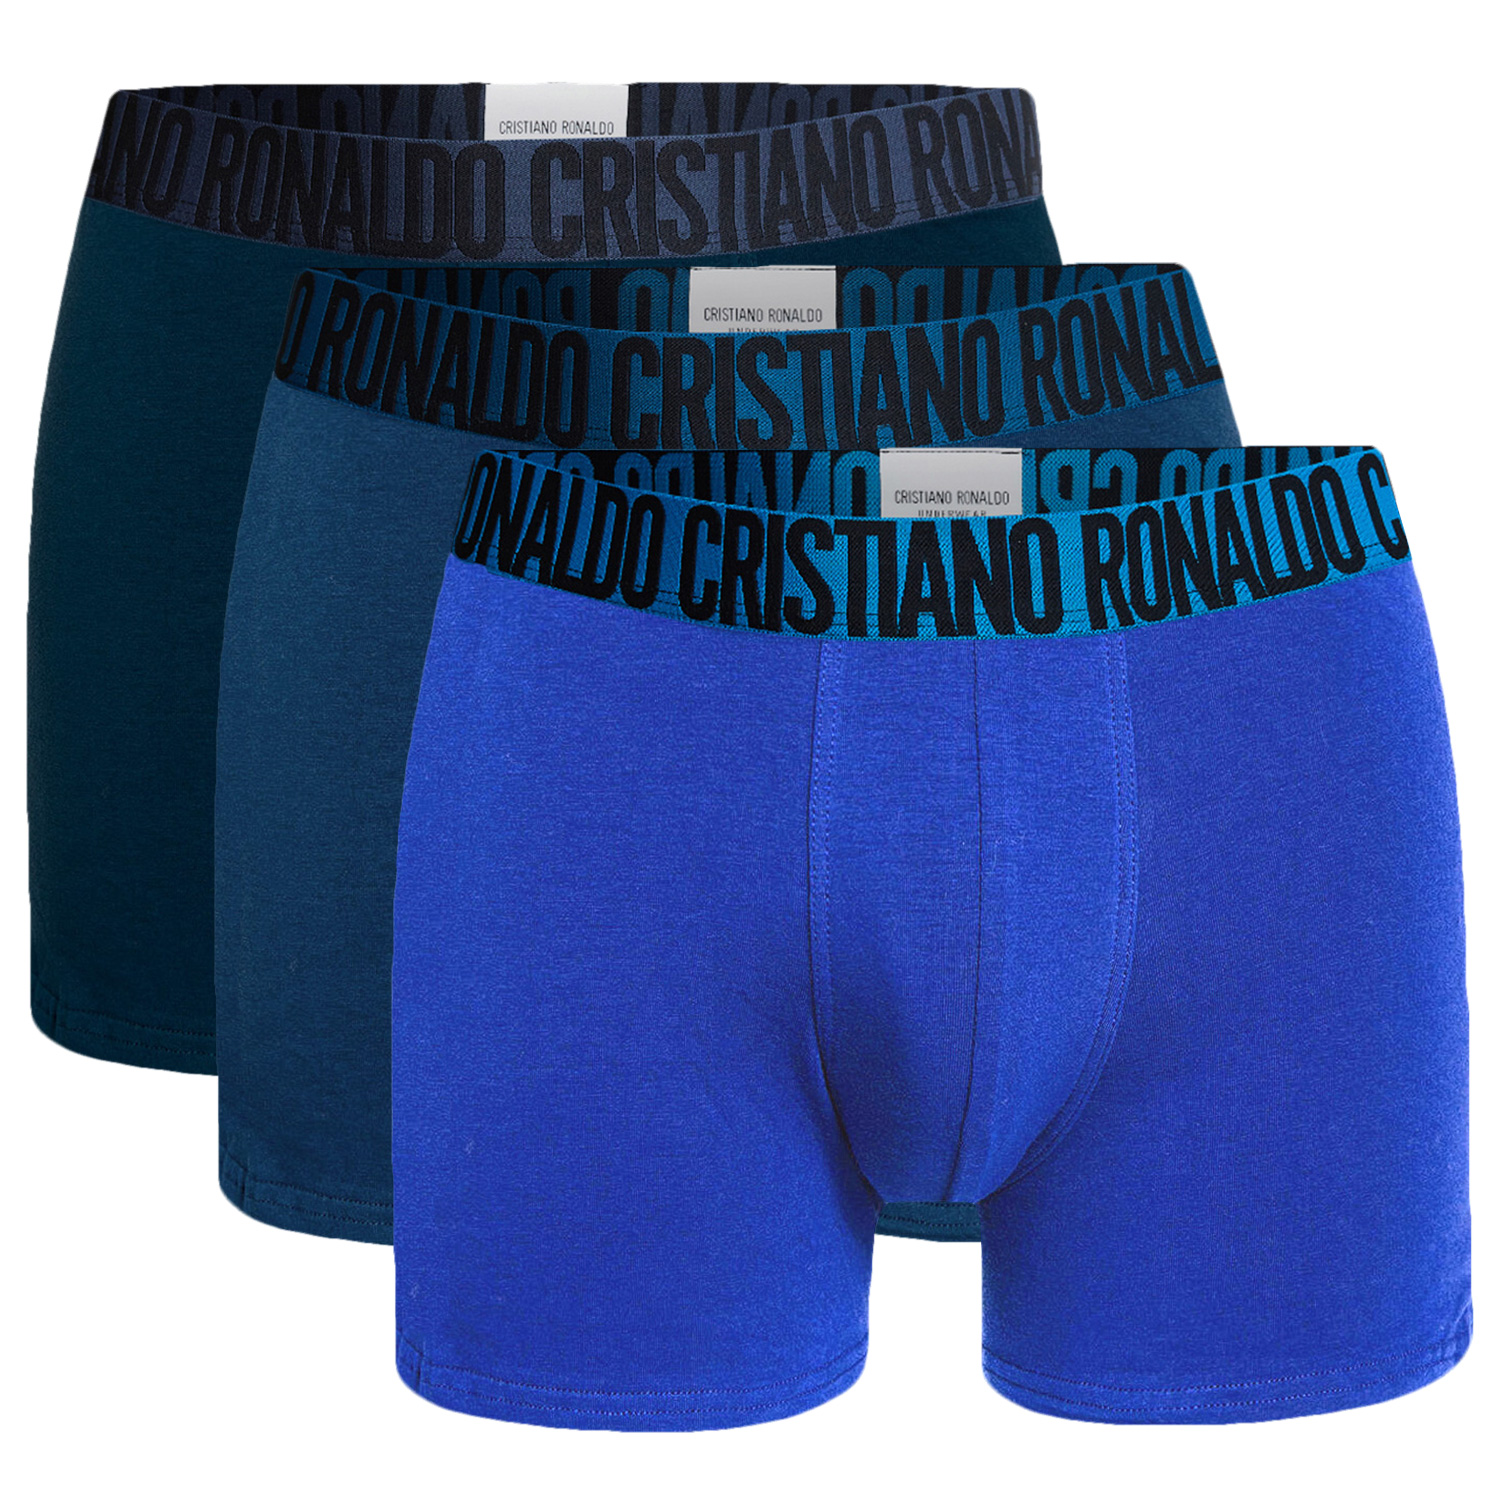 CR7 Cristiano Ronaldo Mens Boxer Shorts Pack of 3